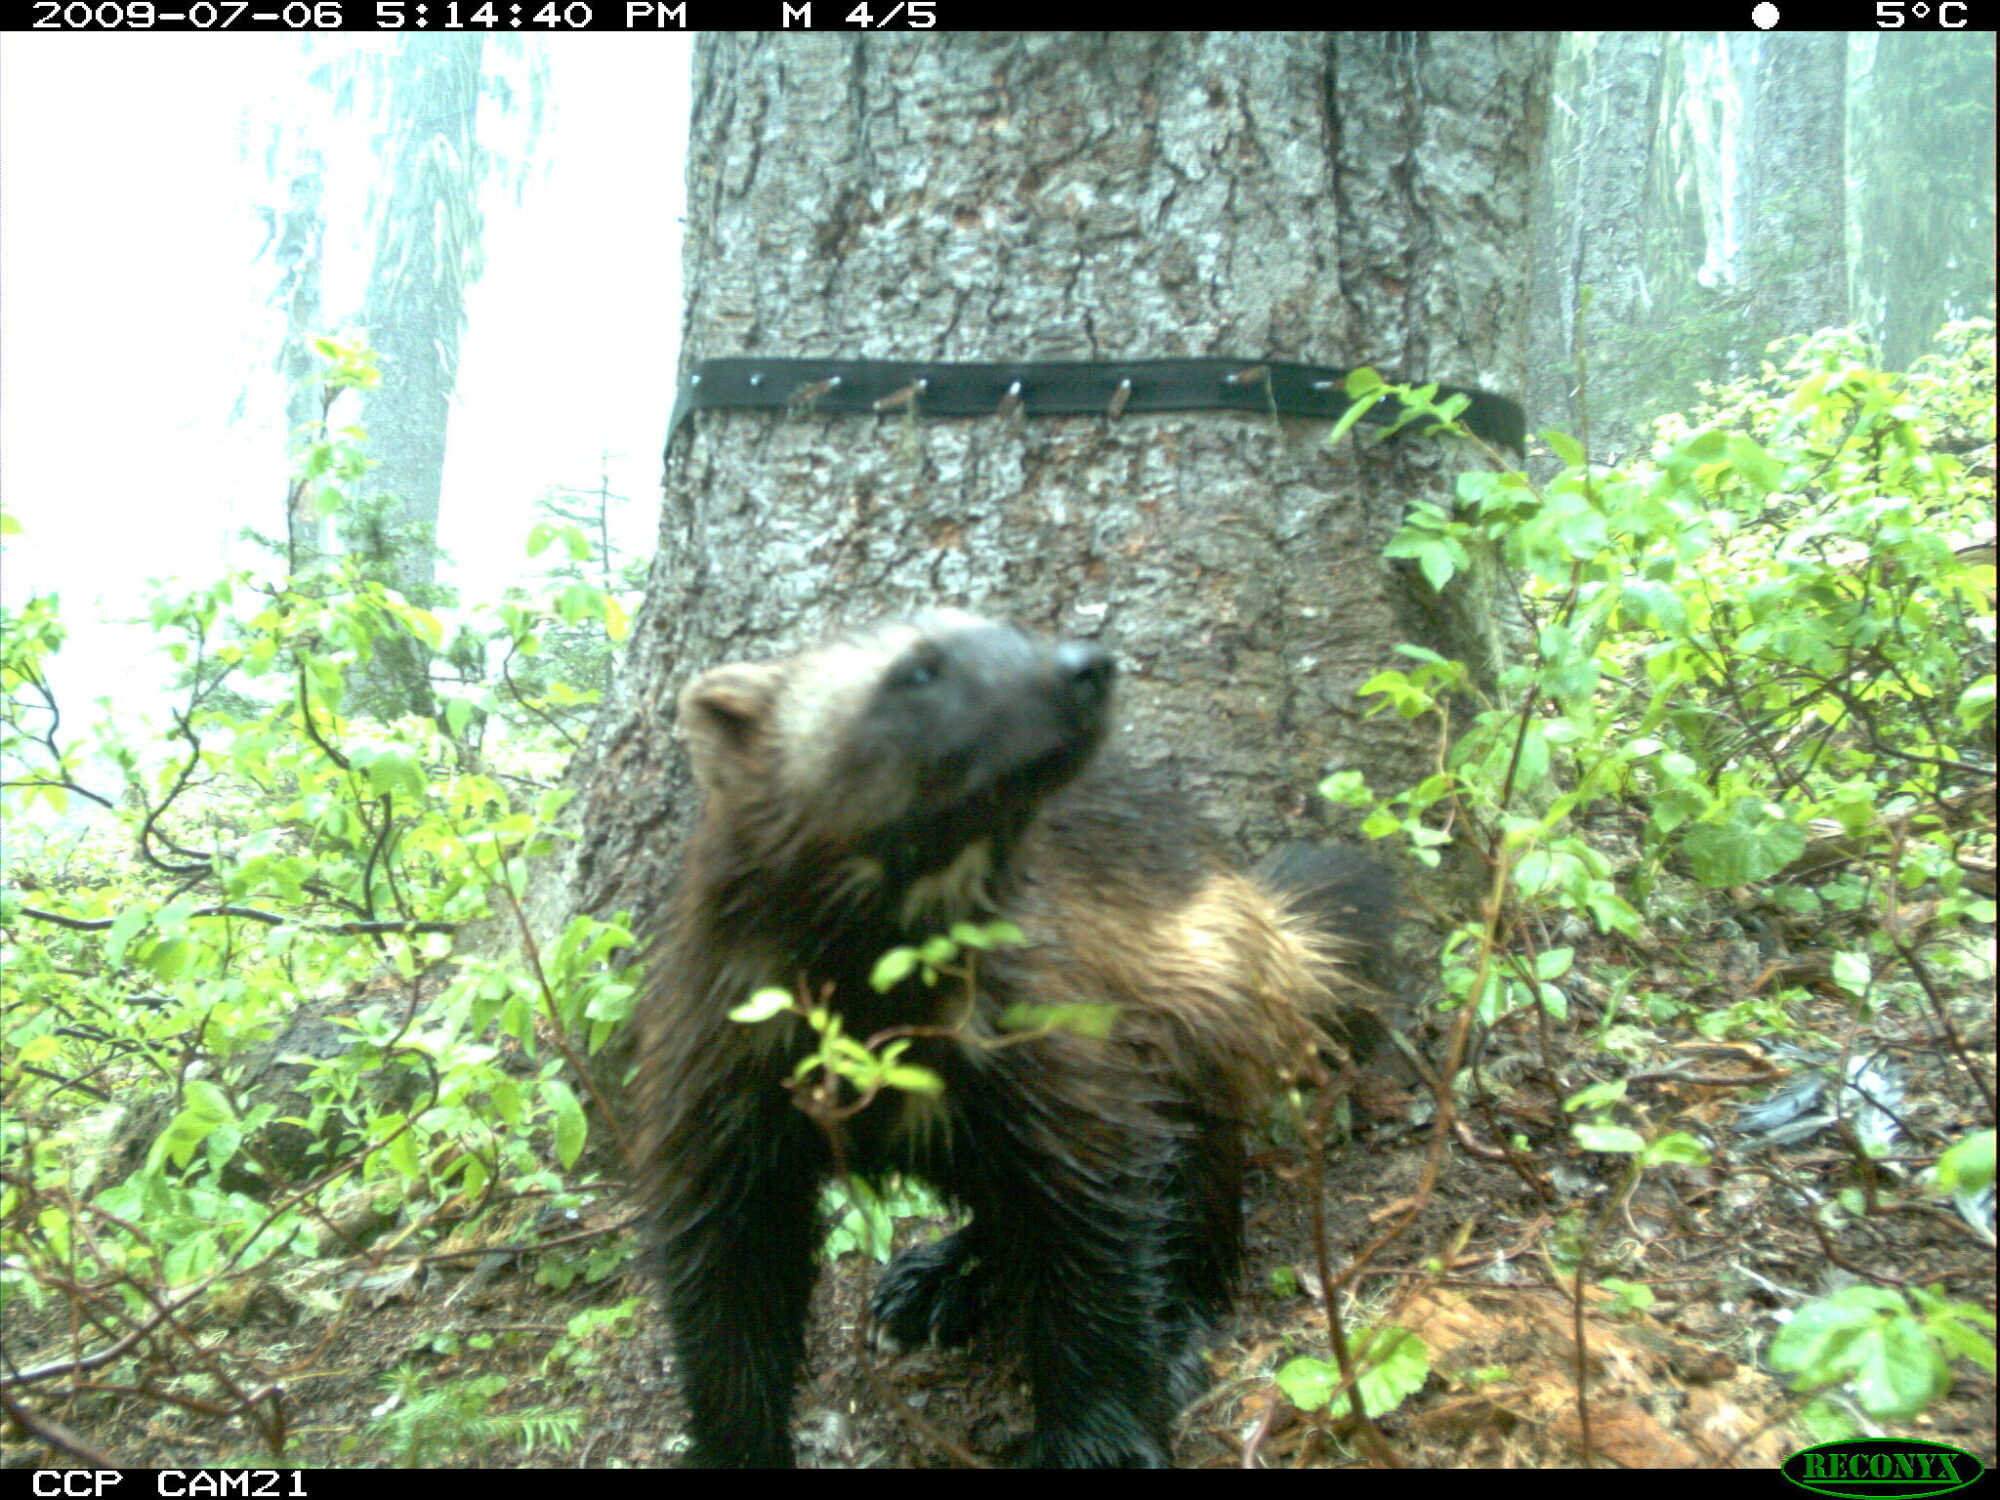 wolverine on trail camera